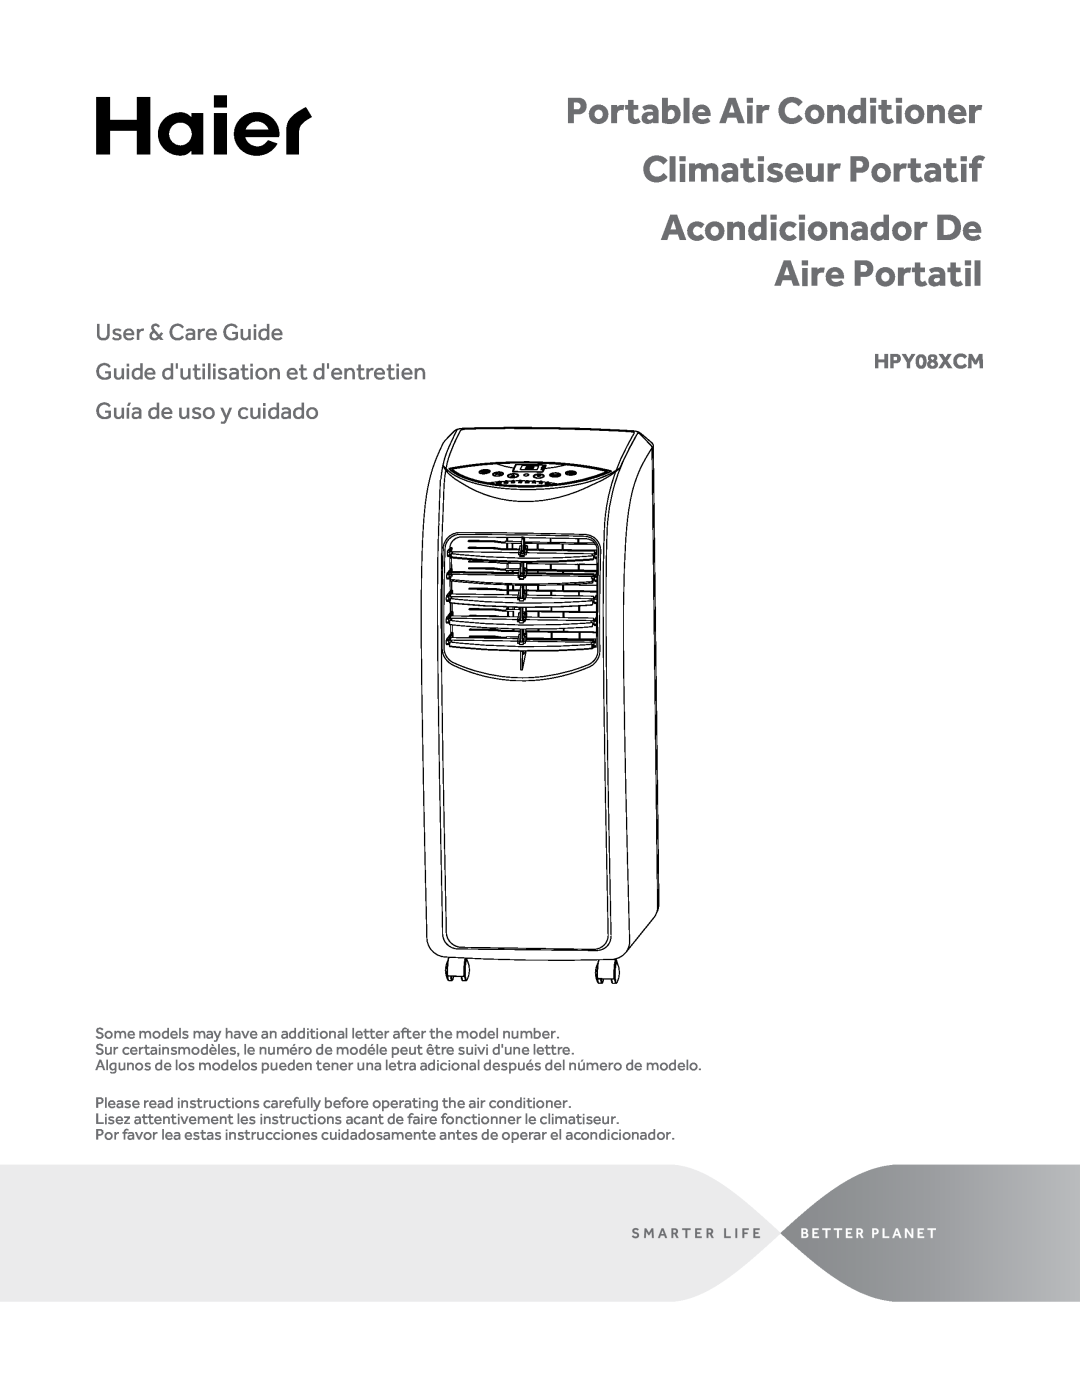 Haier HPY08XCM manual Portable Air Conditioner Climatiseur Portatif, Acondicionador De Aire Portatil, User & Care Guide 